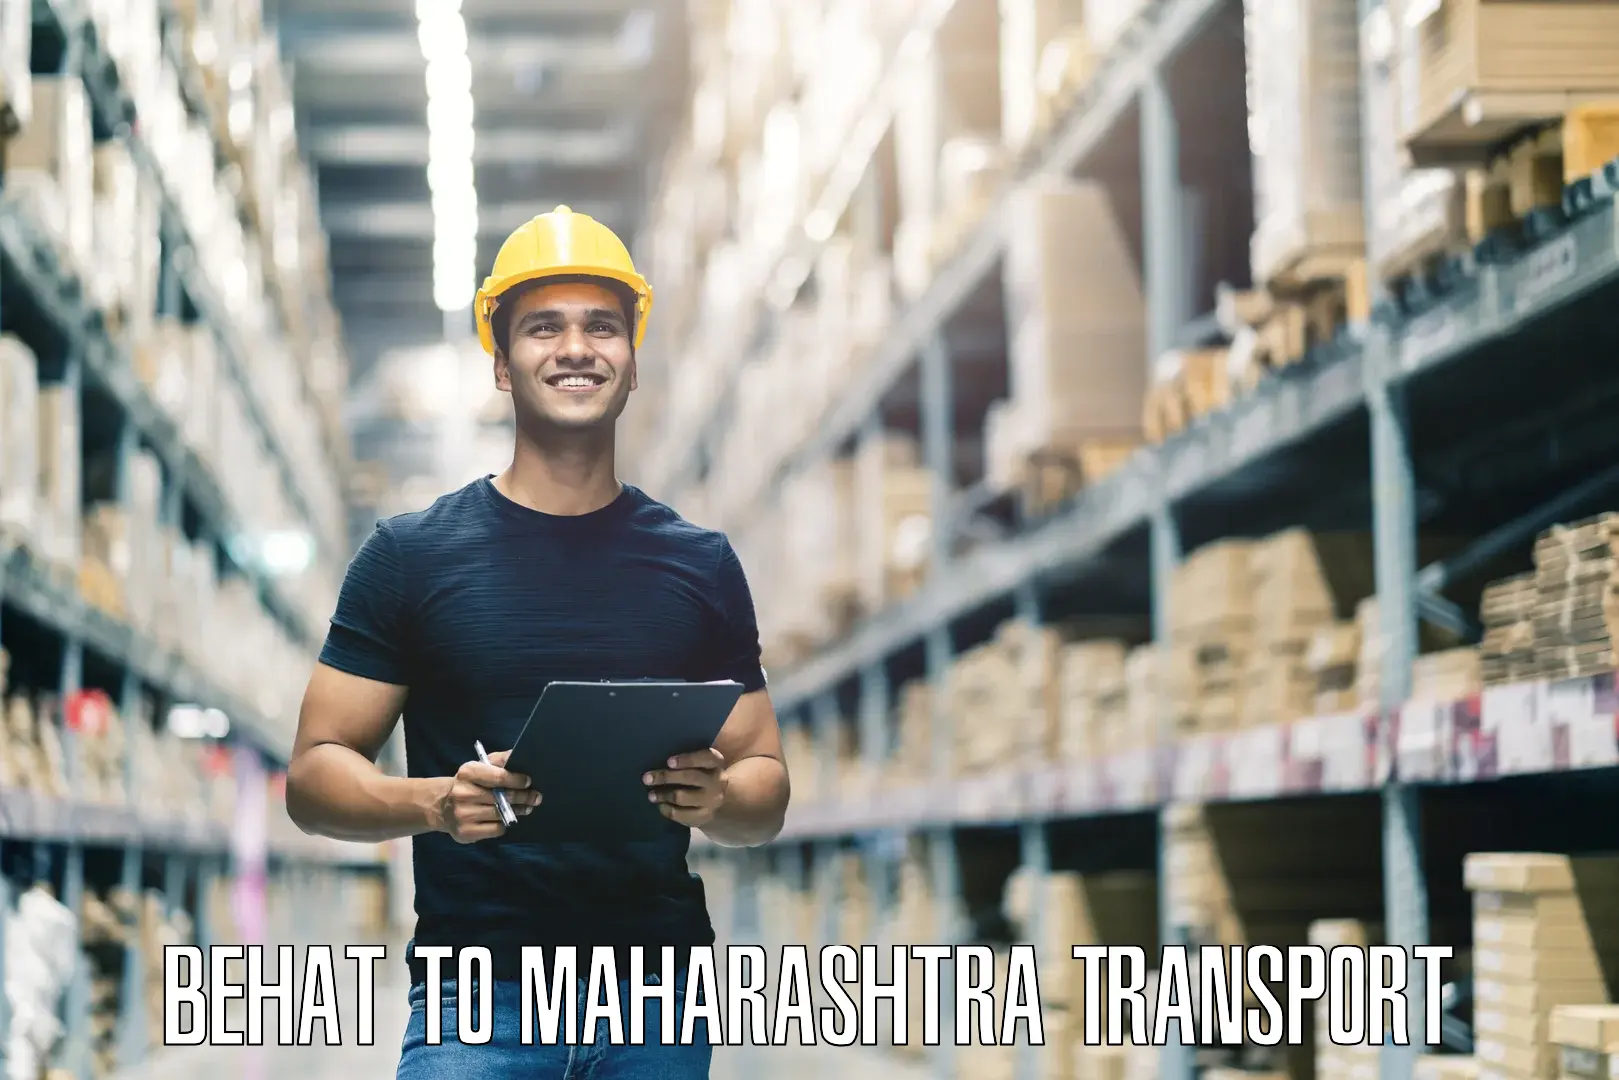 Transport in sharing Behat to Maharashtra